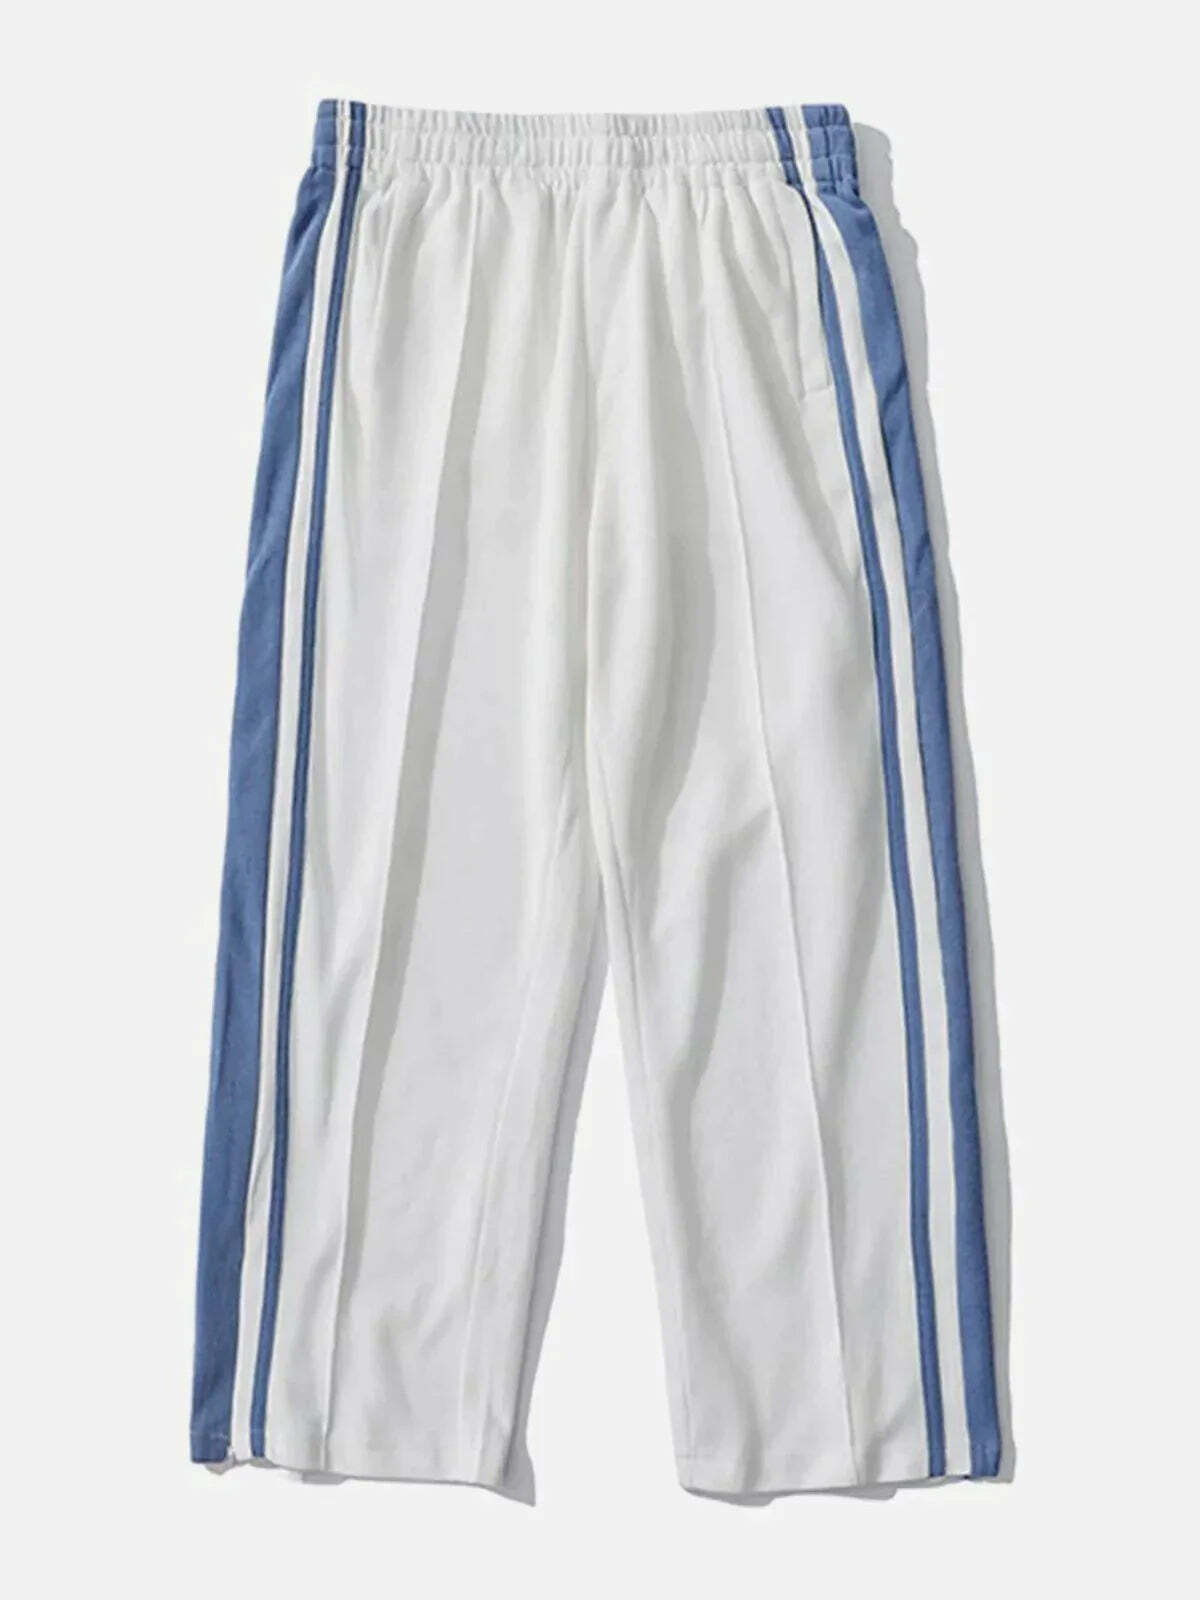 retro side stripe track pants edgy & athletic streetwear 8774